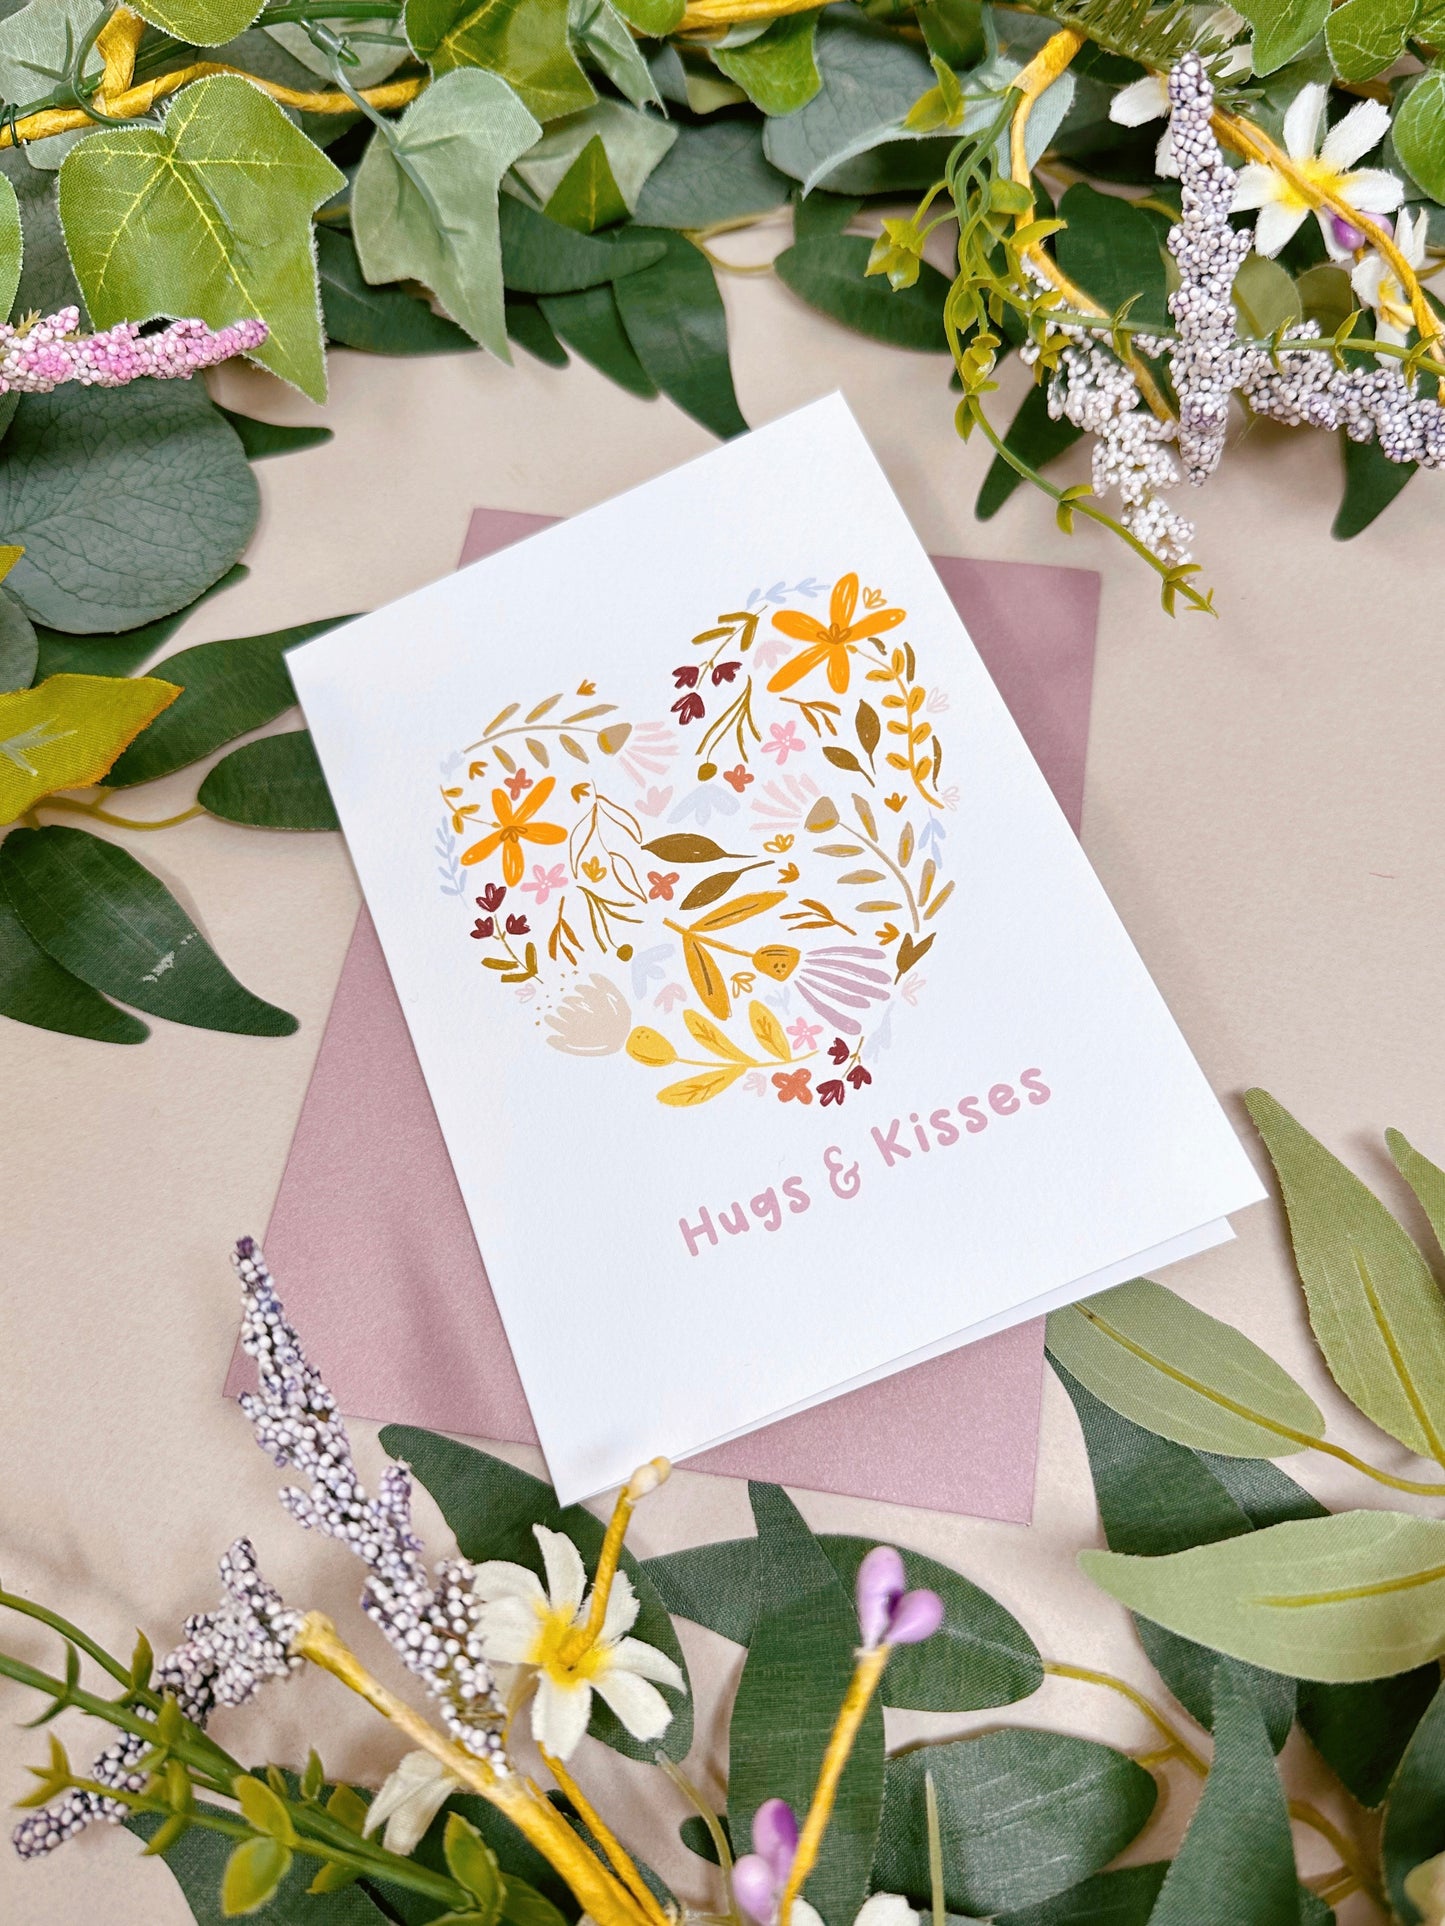 Floral Heart Hugs & Kisses Card